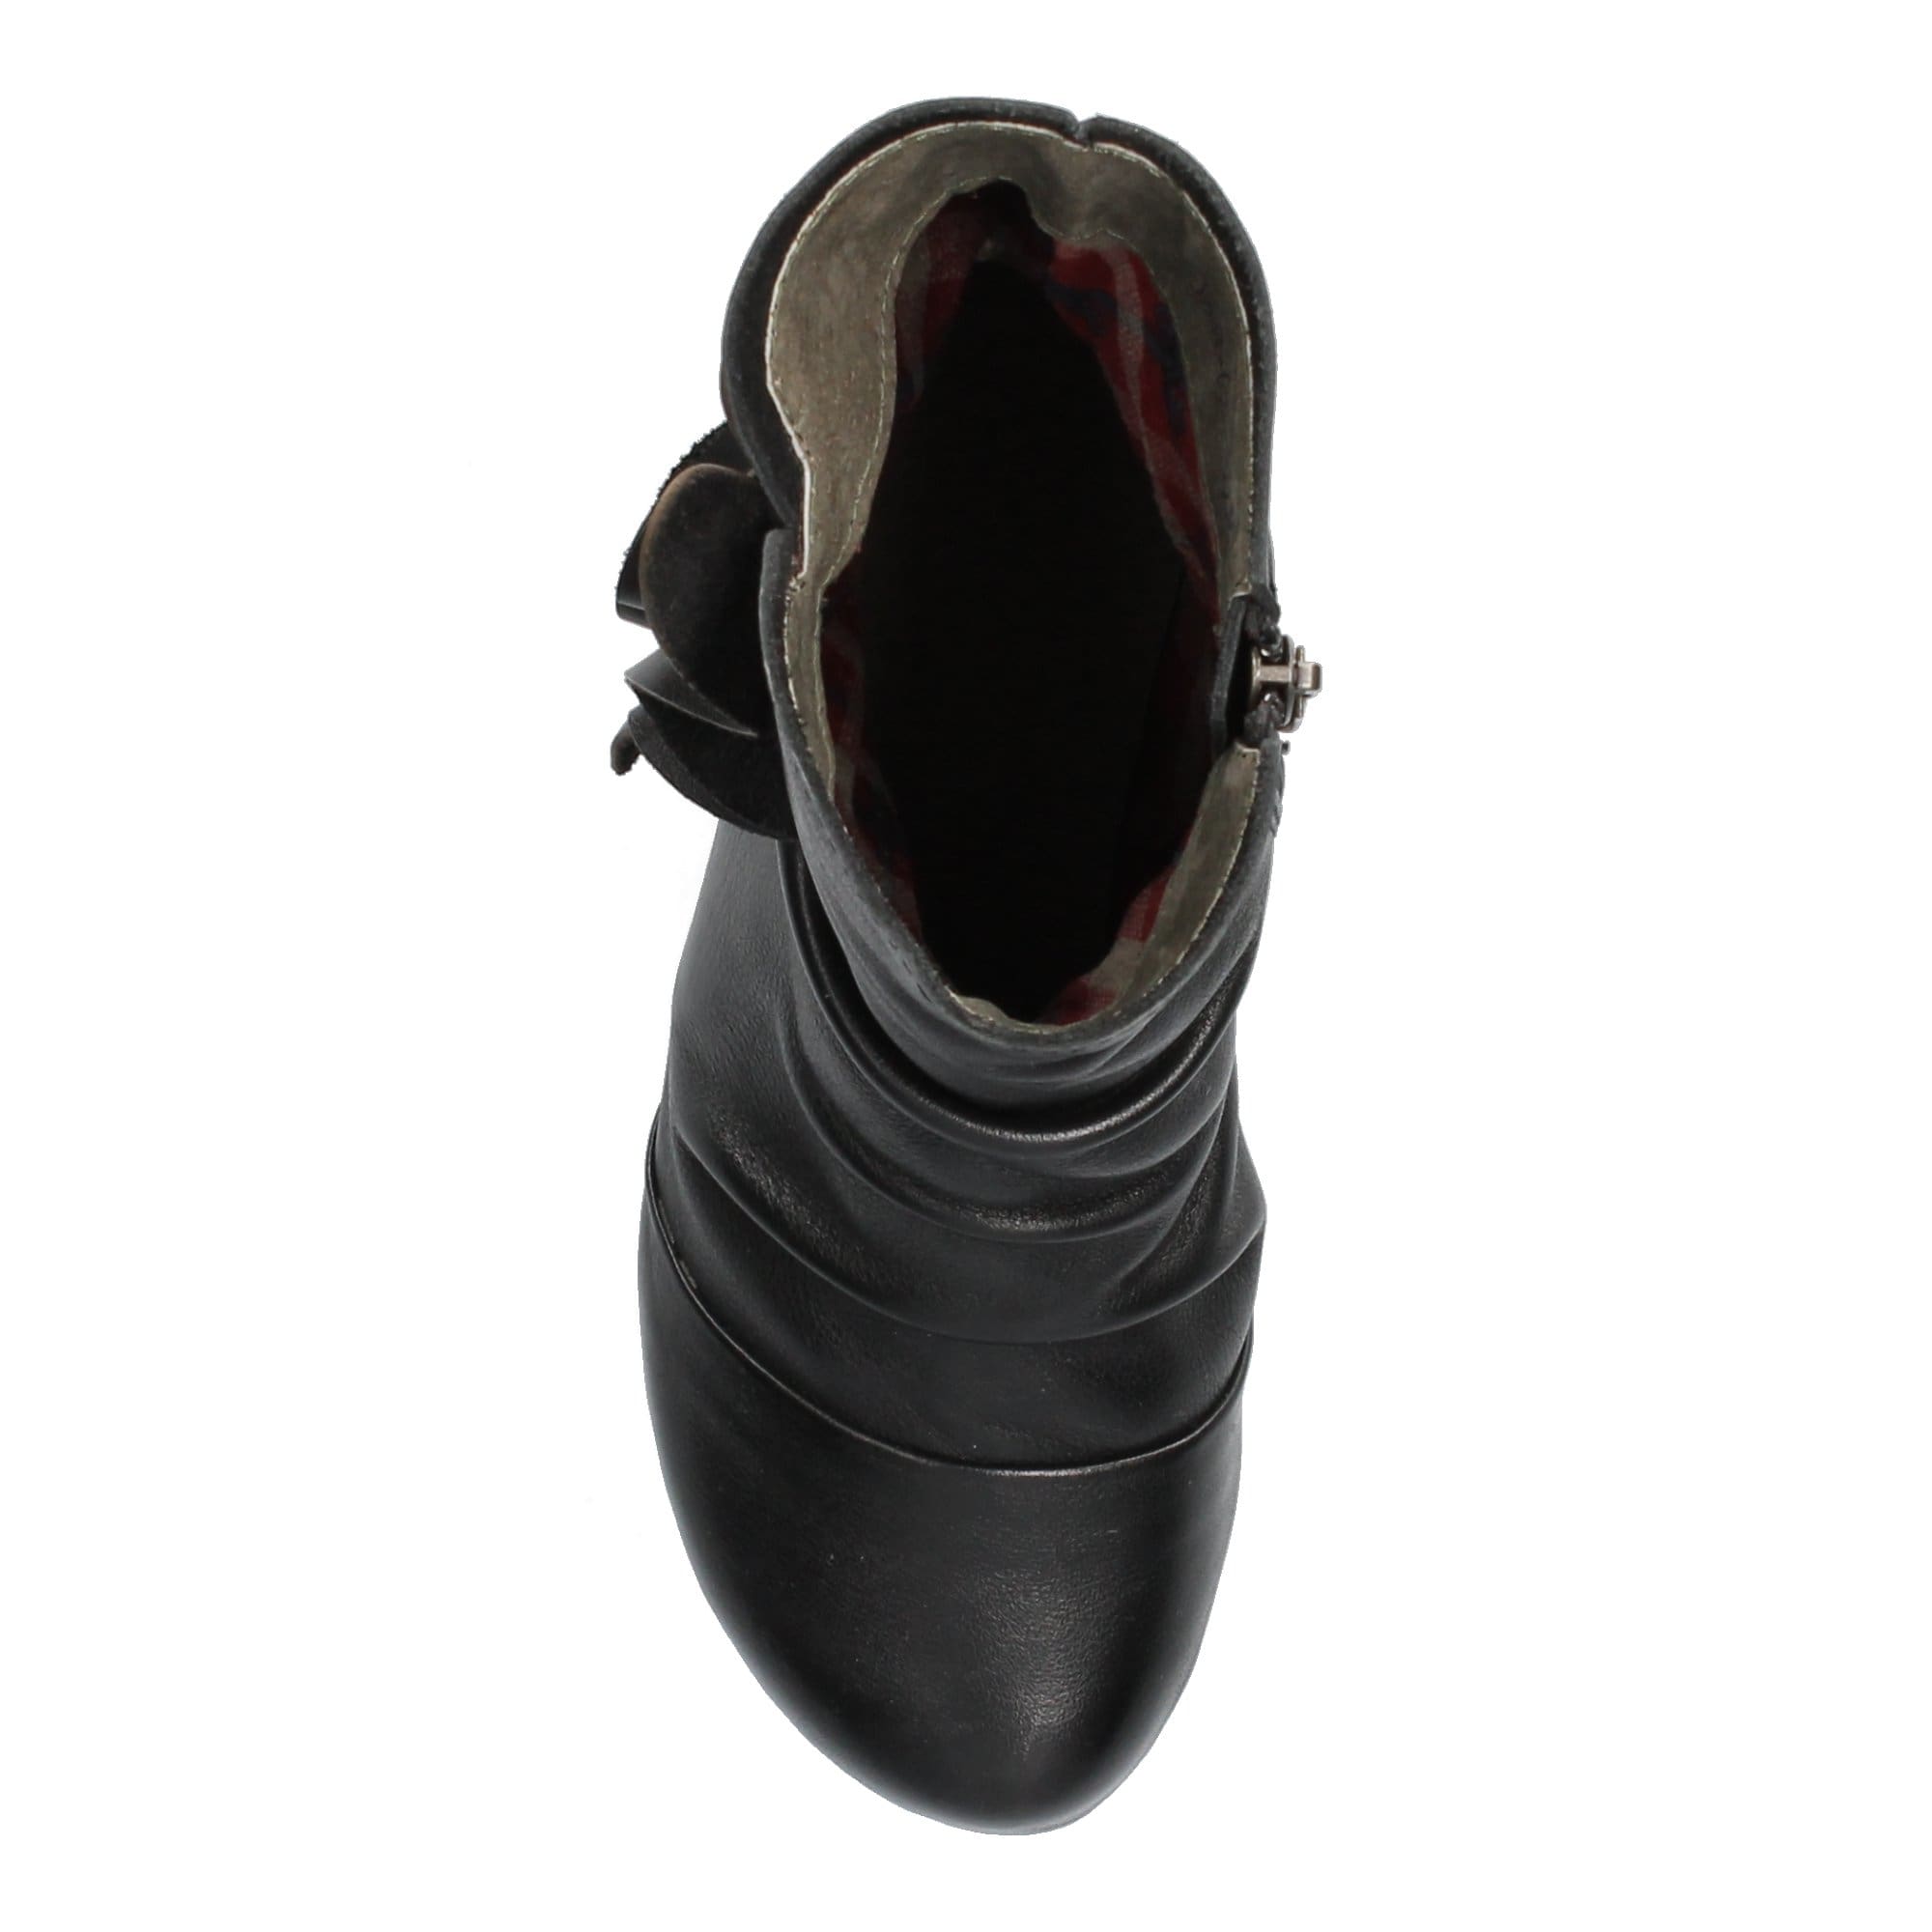 Shoe ARMANCE 118 - Boots